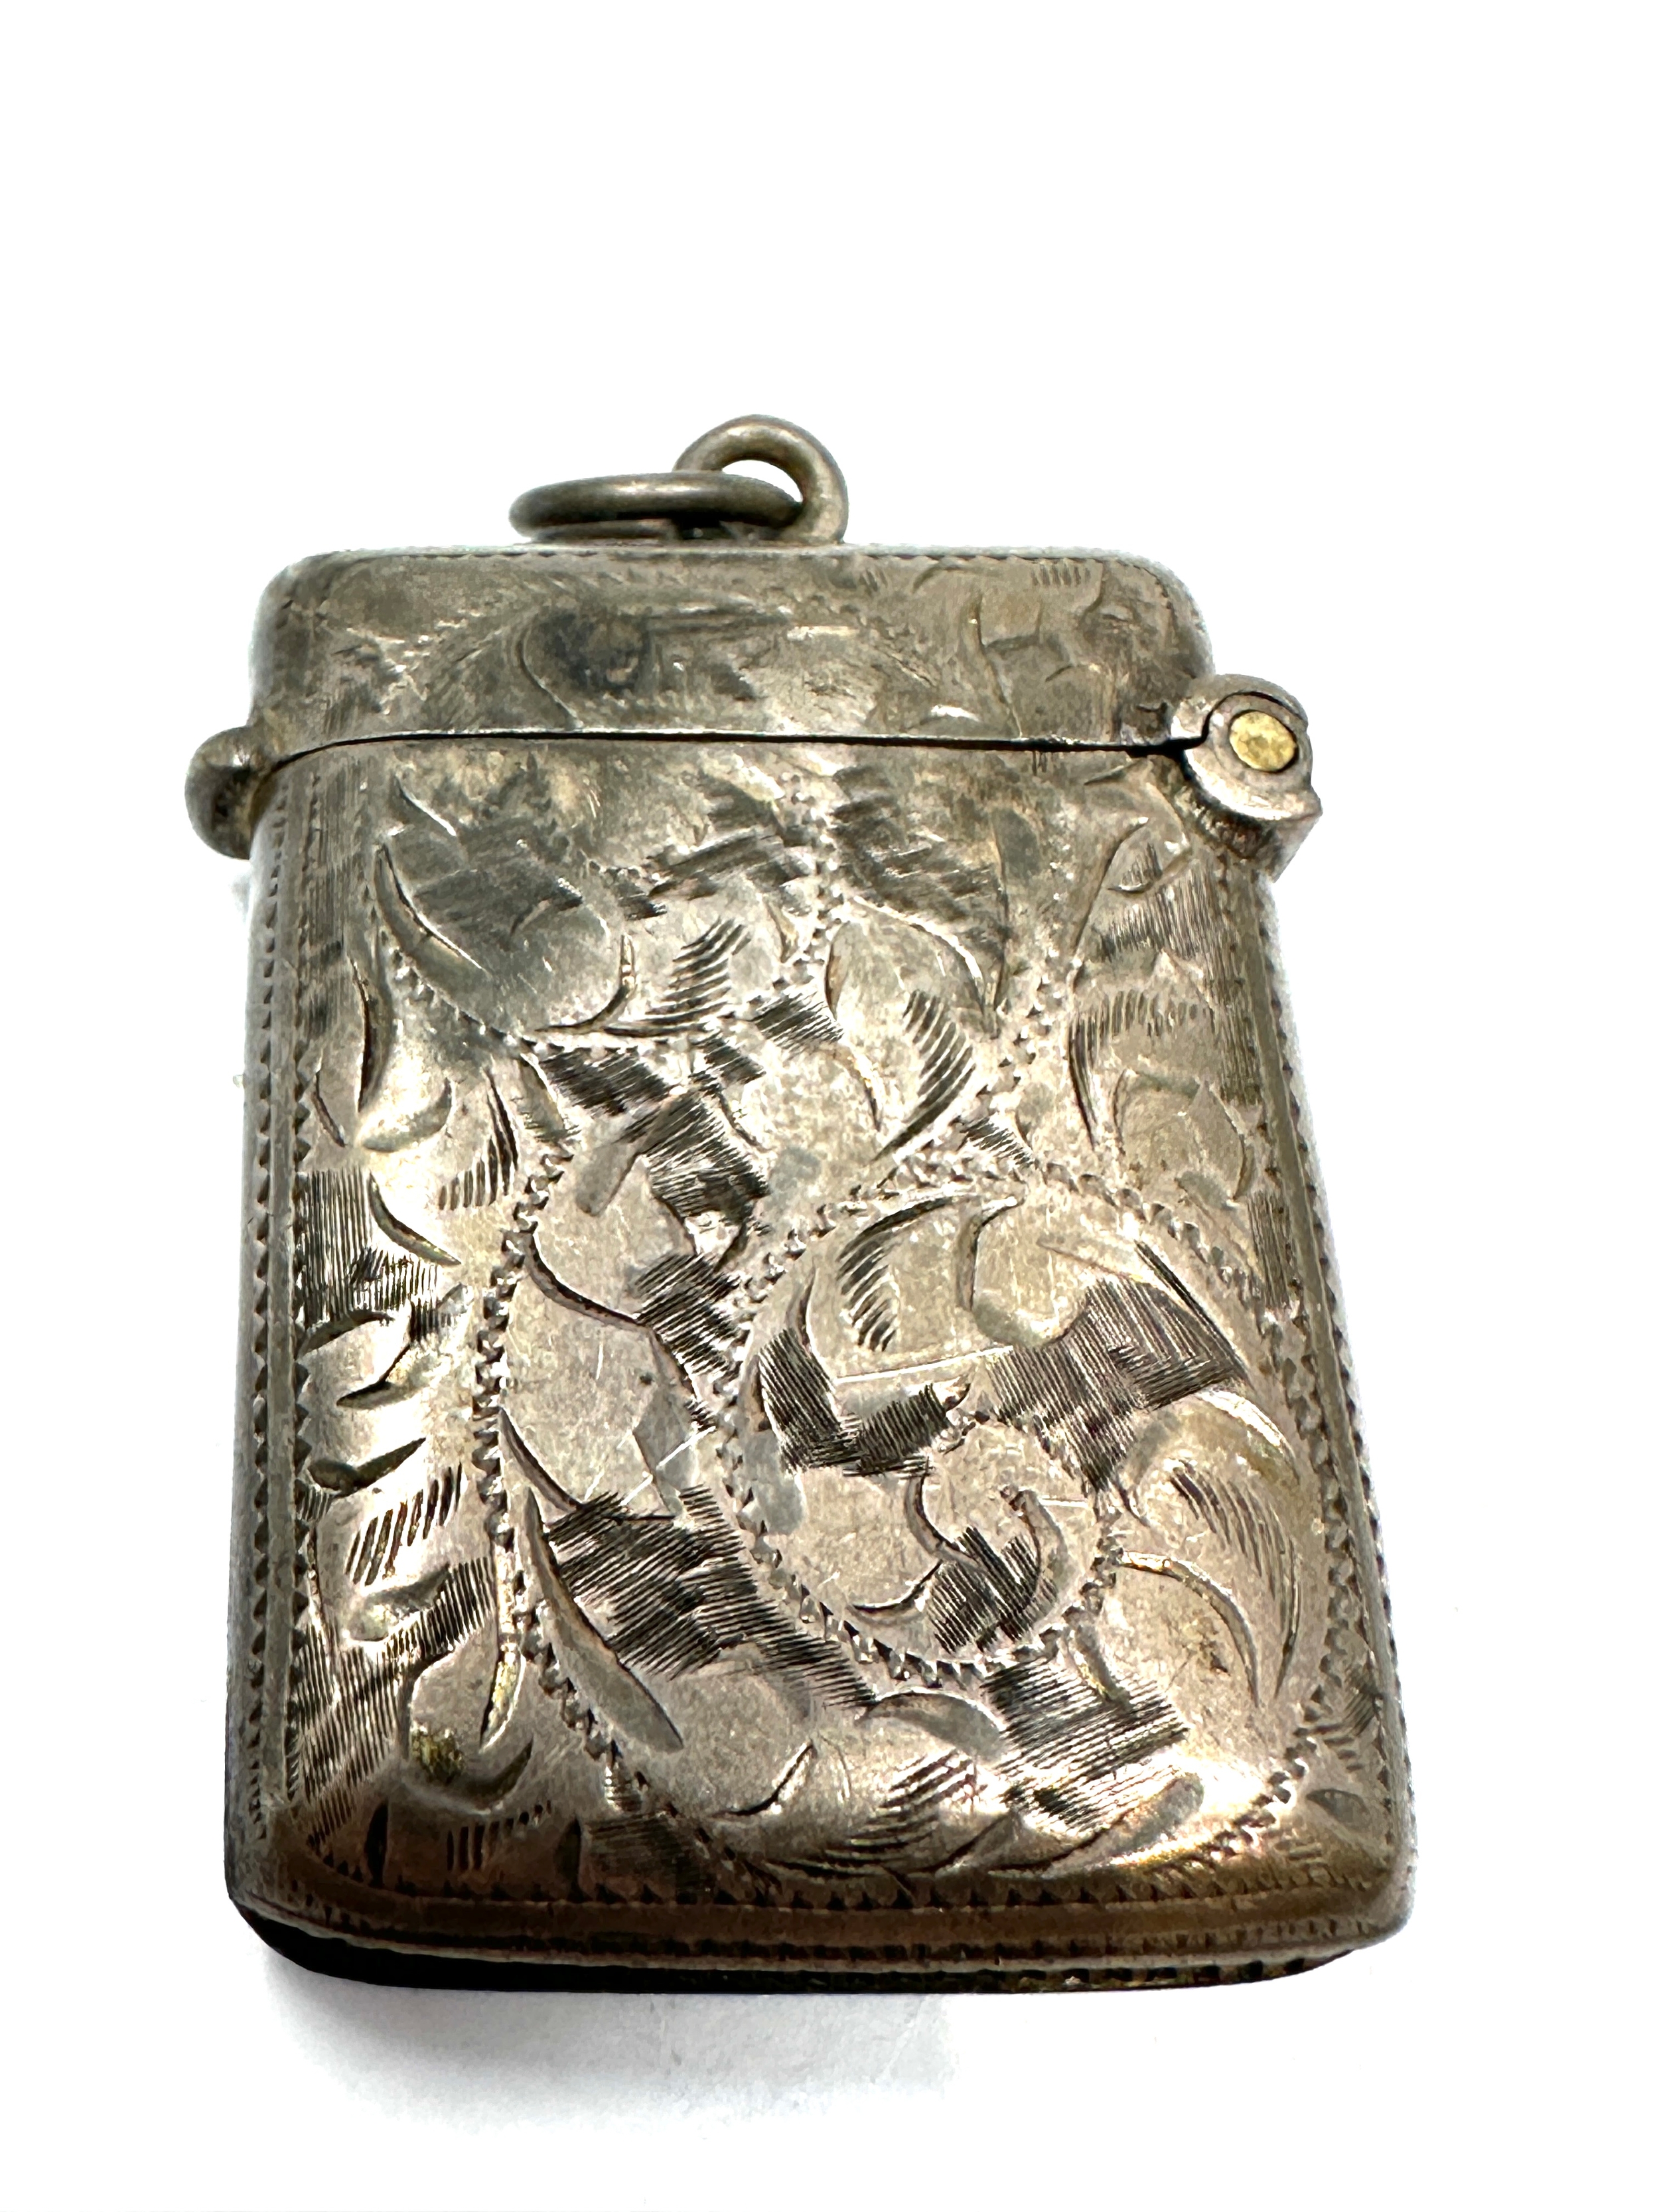 Antique silver vesta case - Image 3 of 4